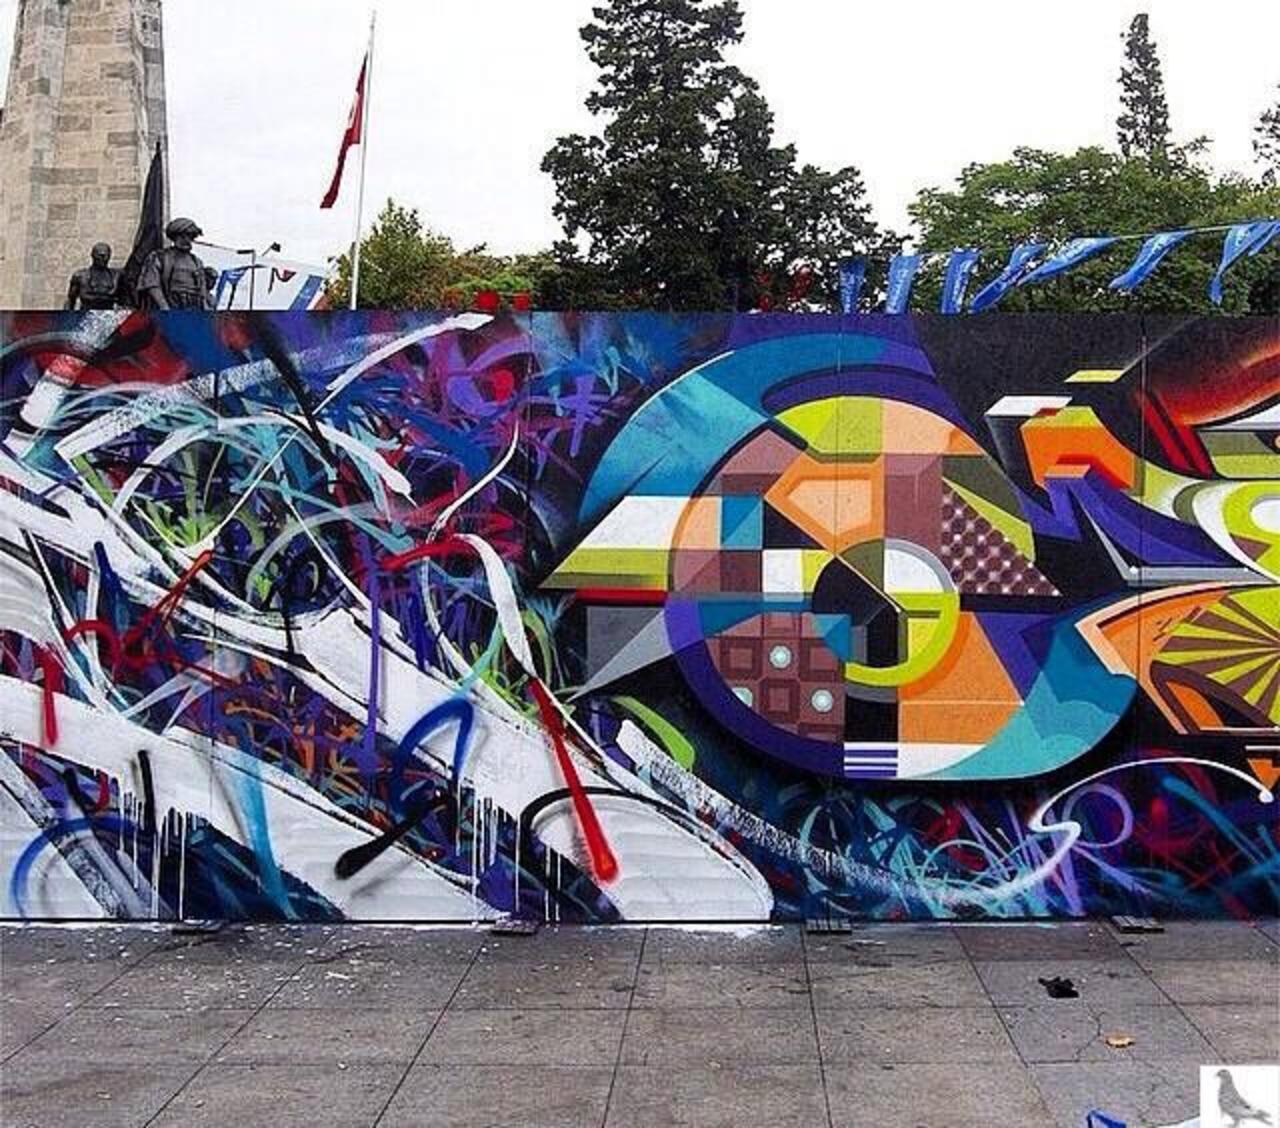 "@GoogleStreetArt: Artist @Saber vibrant Street Art wall located in Istanbul, Turkey 

#art #graffiti #streetart http://t.co/srXAjeT6vl"